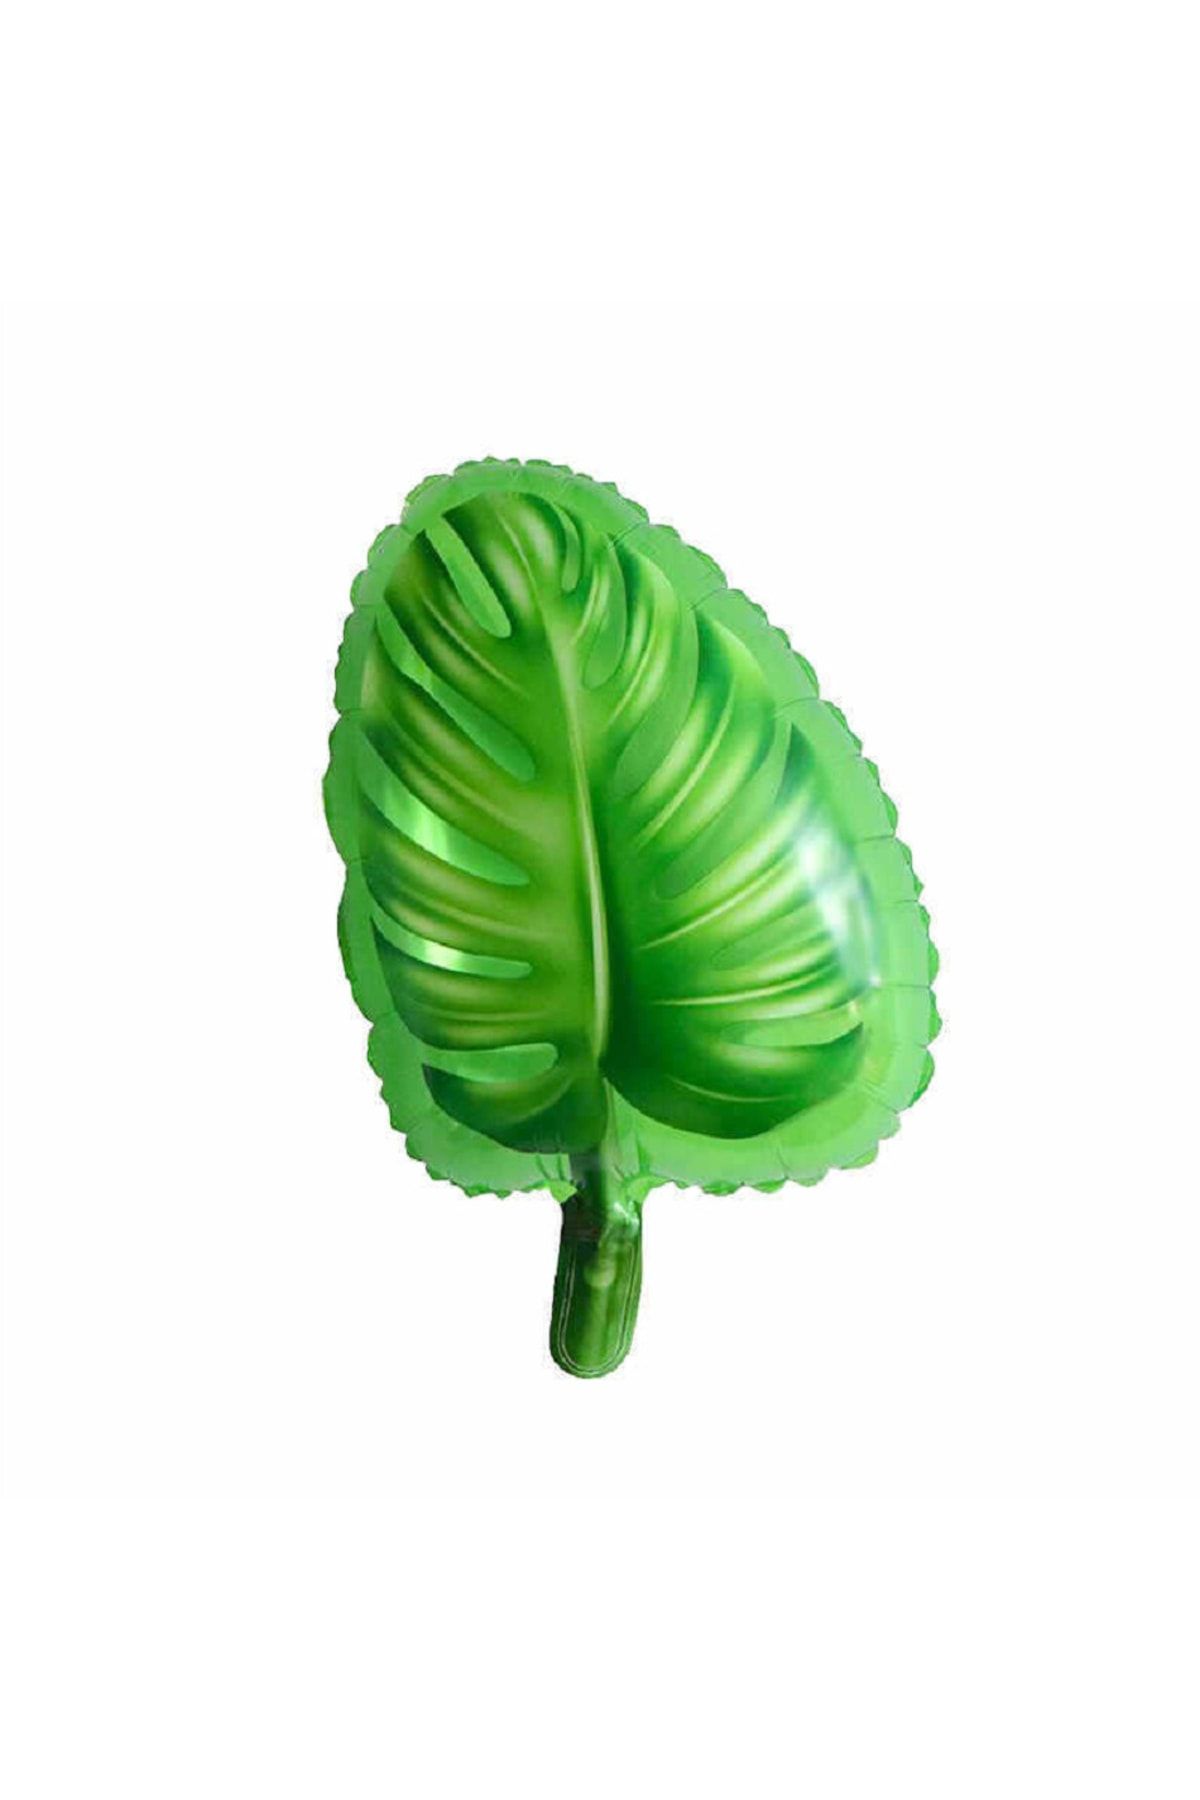 Hawaii Yaprak Şeklinde Folyo Balon Tropical Orman Temalı Dekoratif Parti Balonu 40x51,5 Cm_0